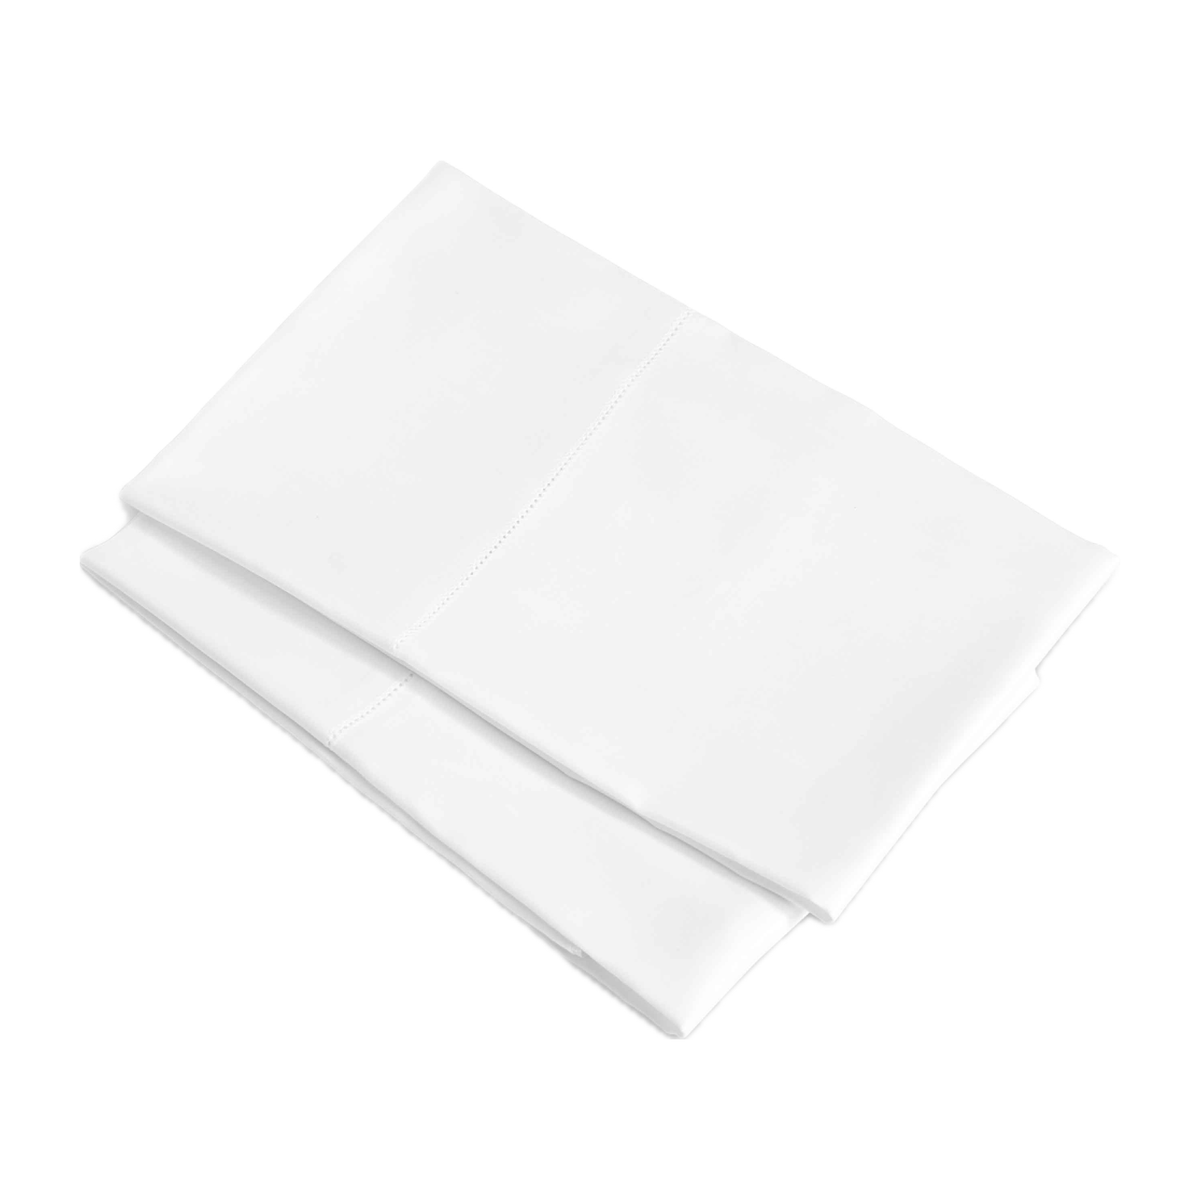 Folded Signoria Nuvola Bedding Pillowcases in White Color